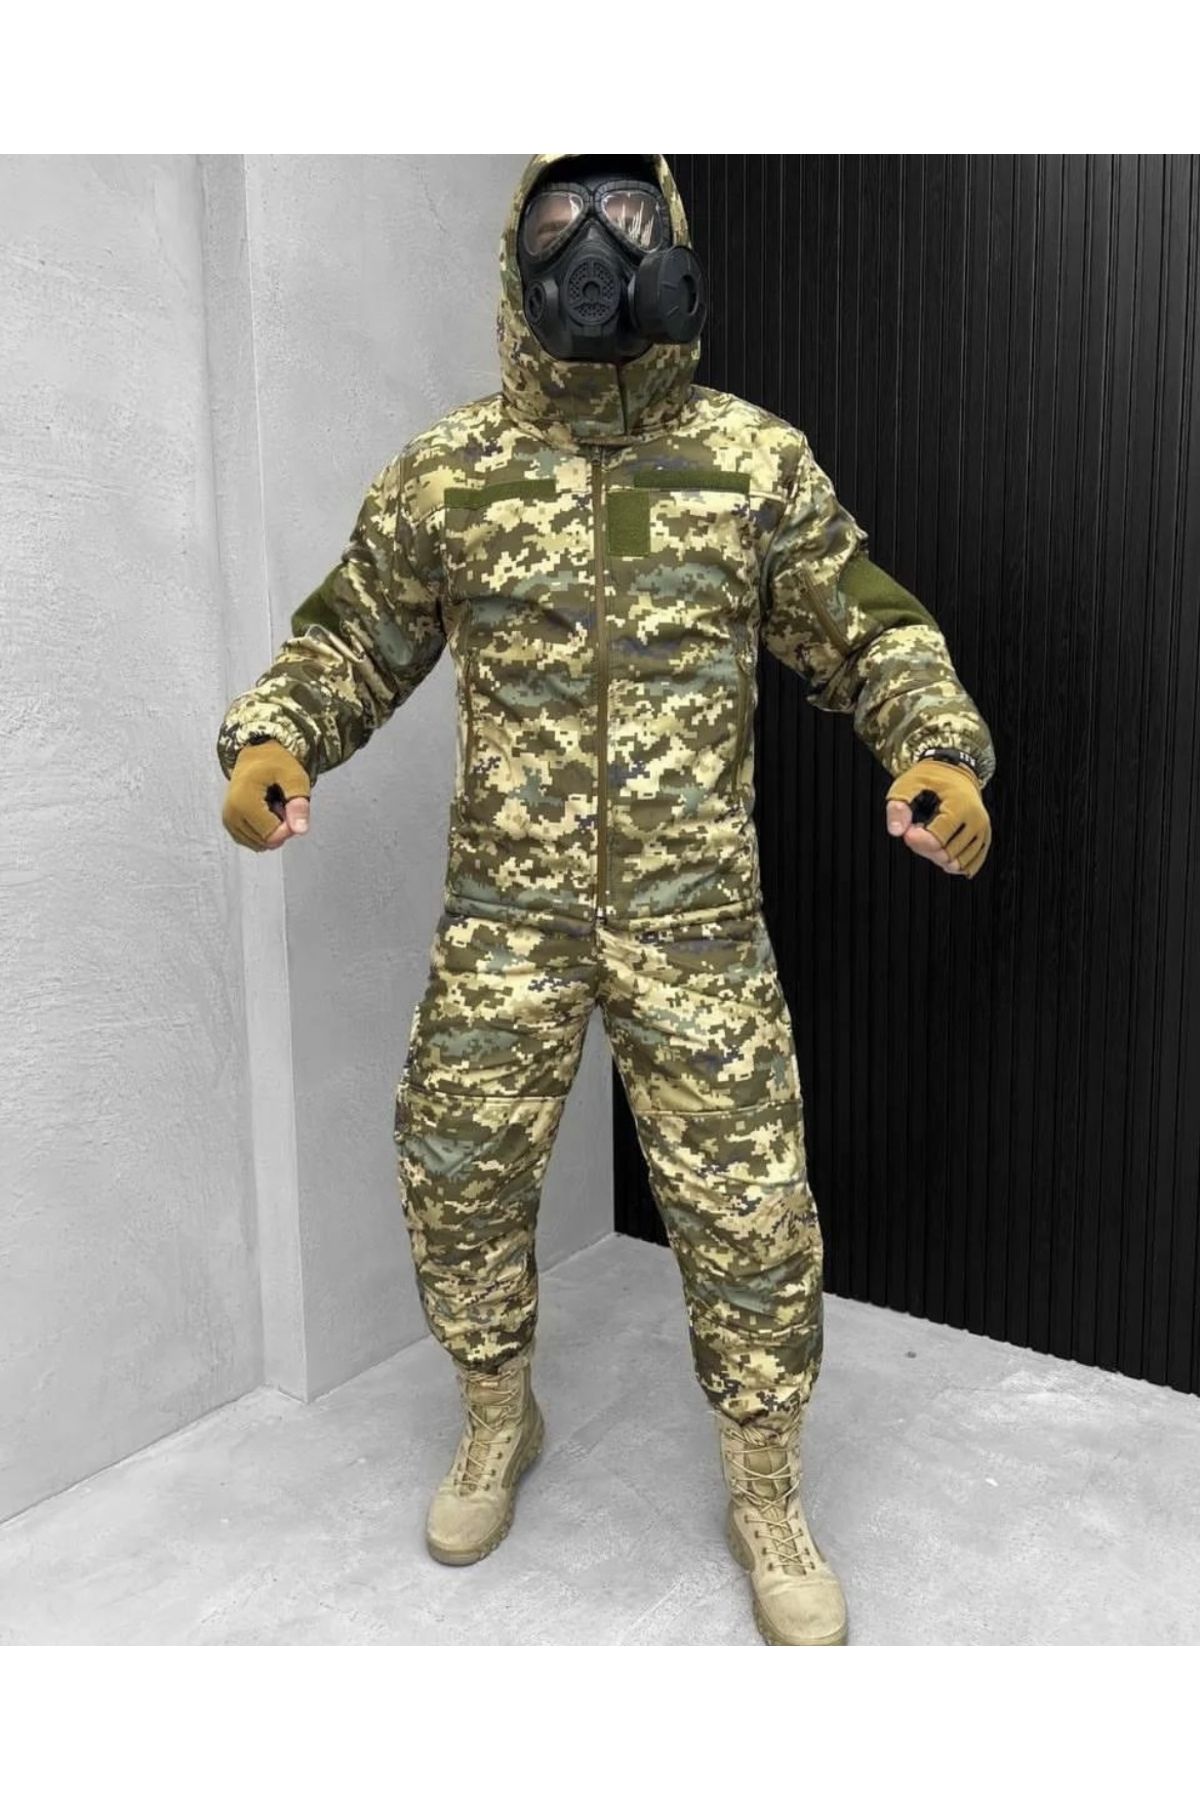 eser askeri malzeme Ukranya piksel soft selh takım